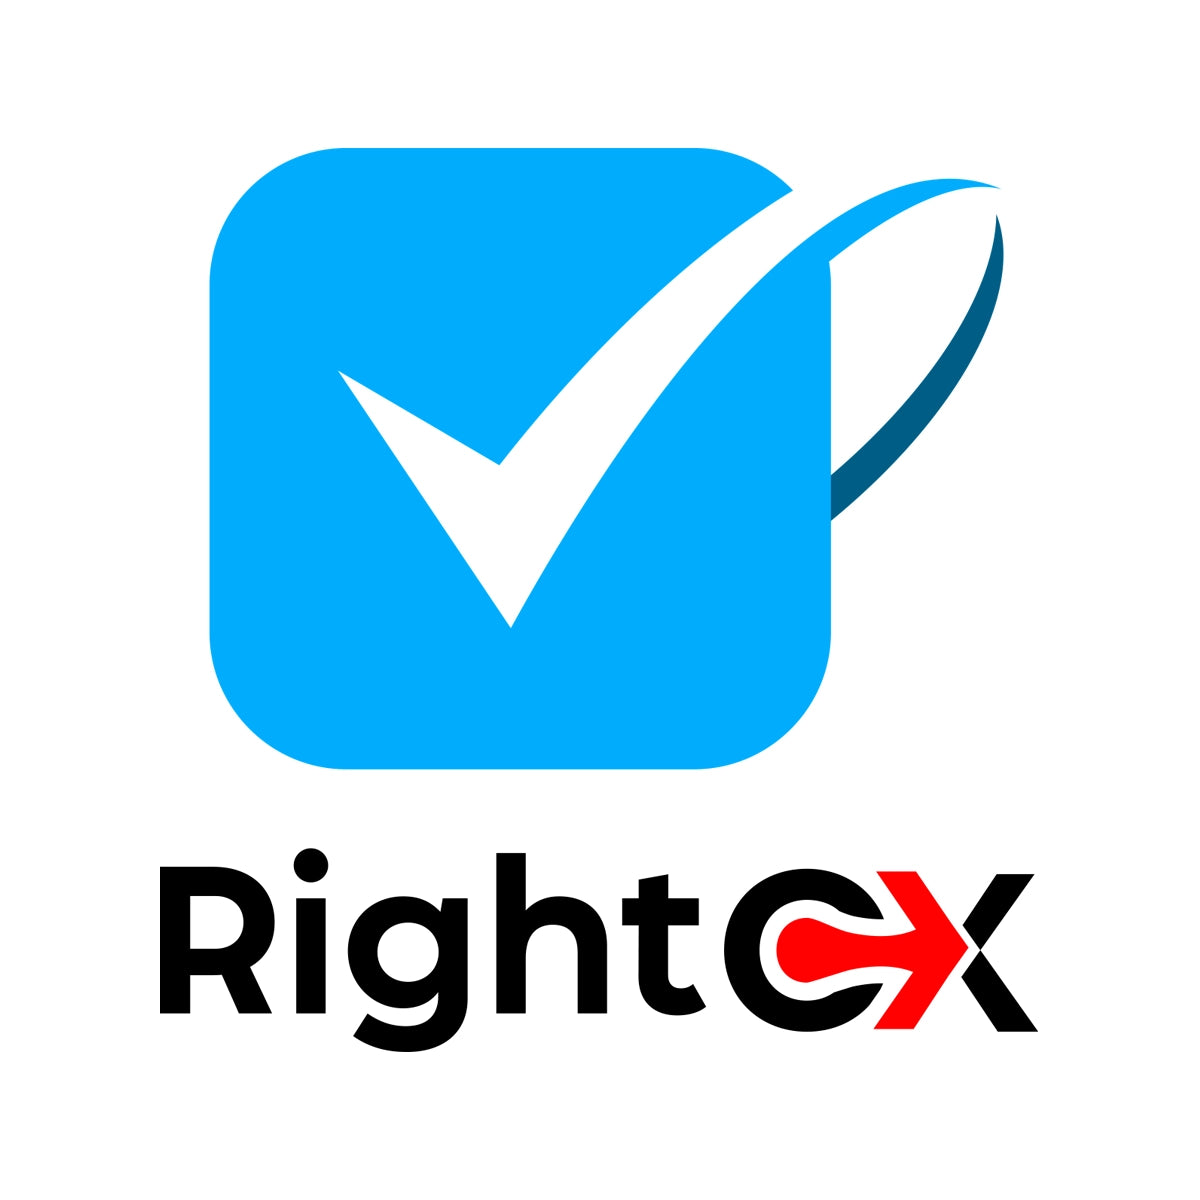 rightcx.com